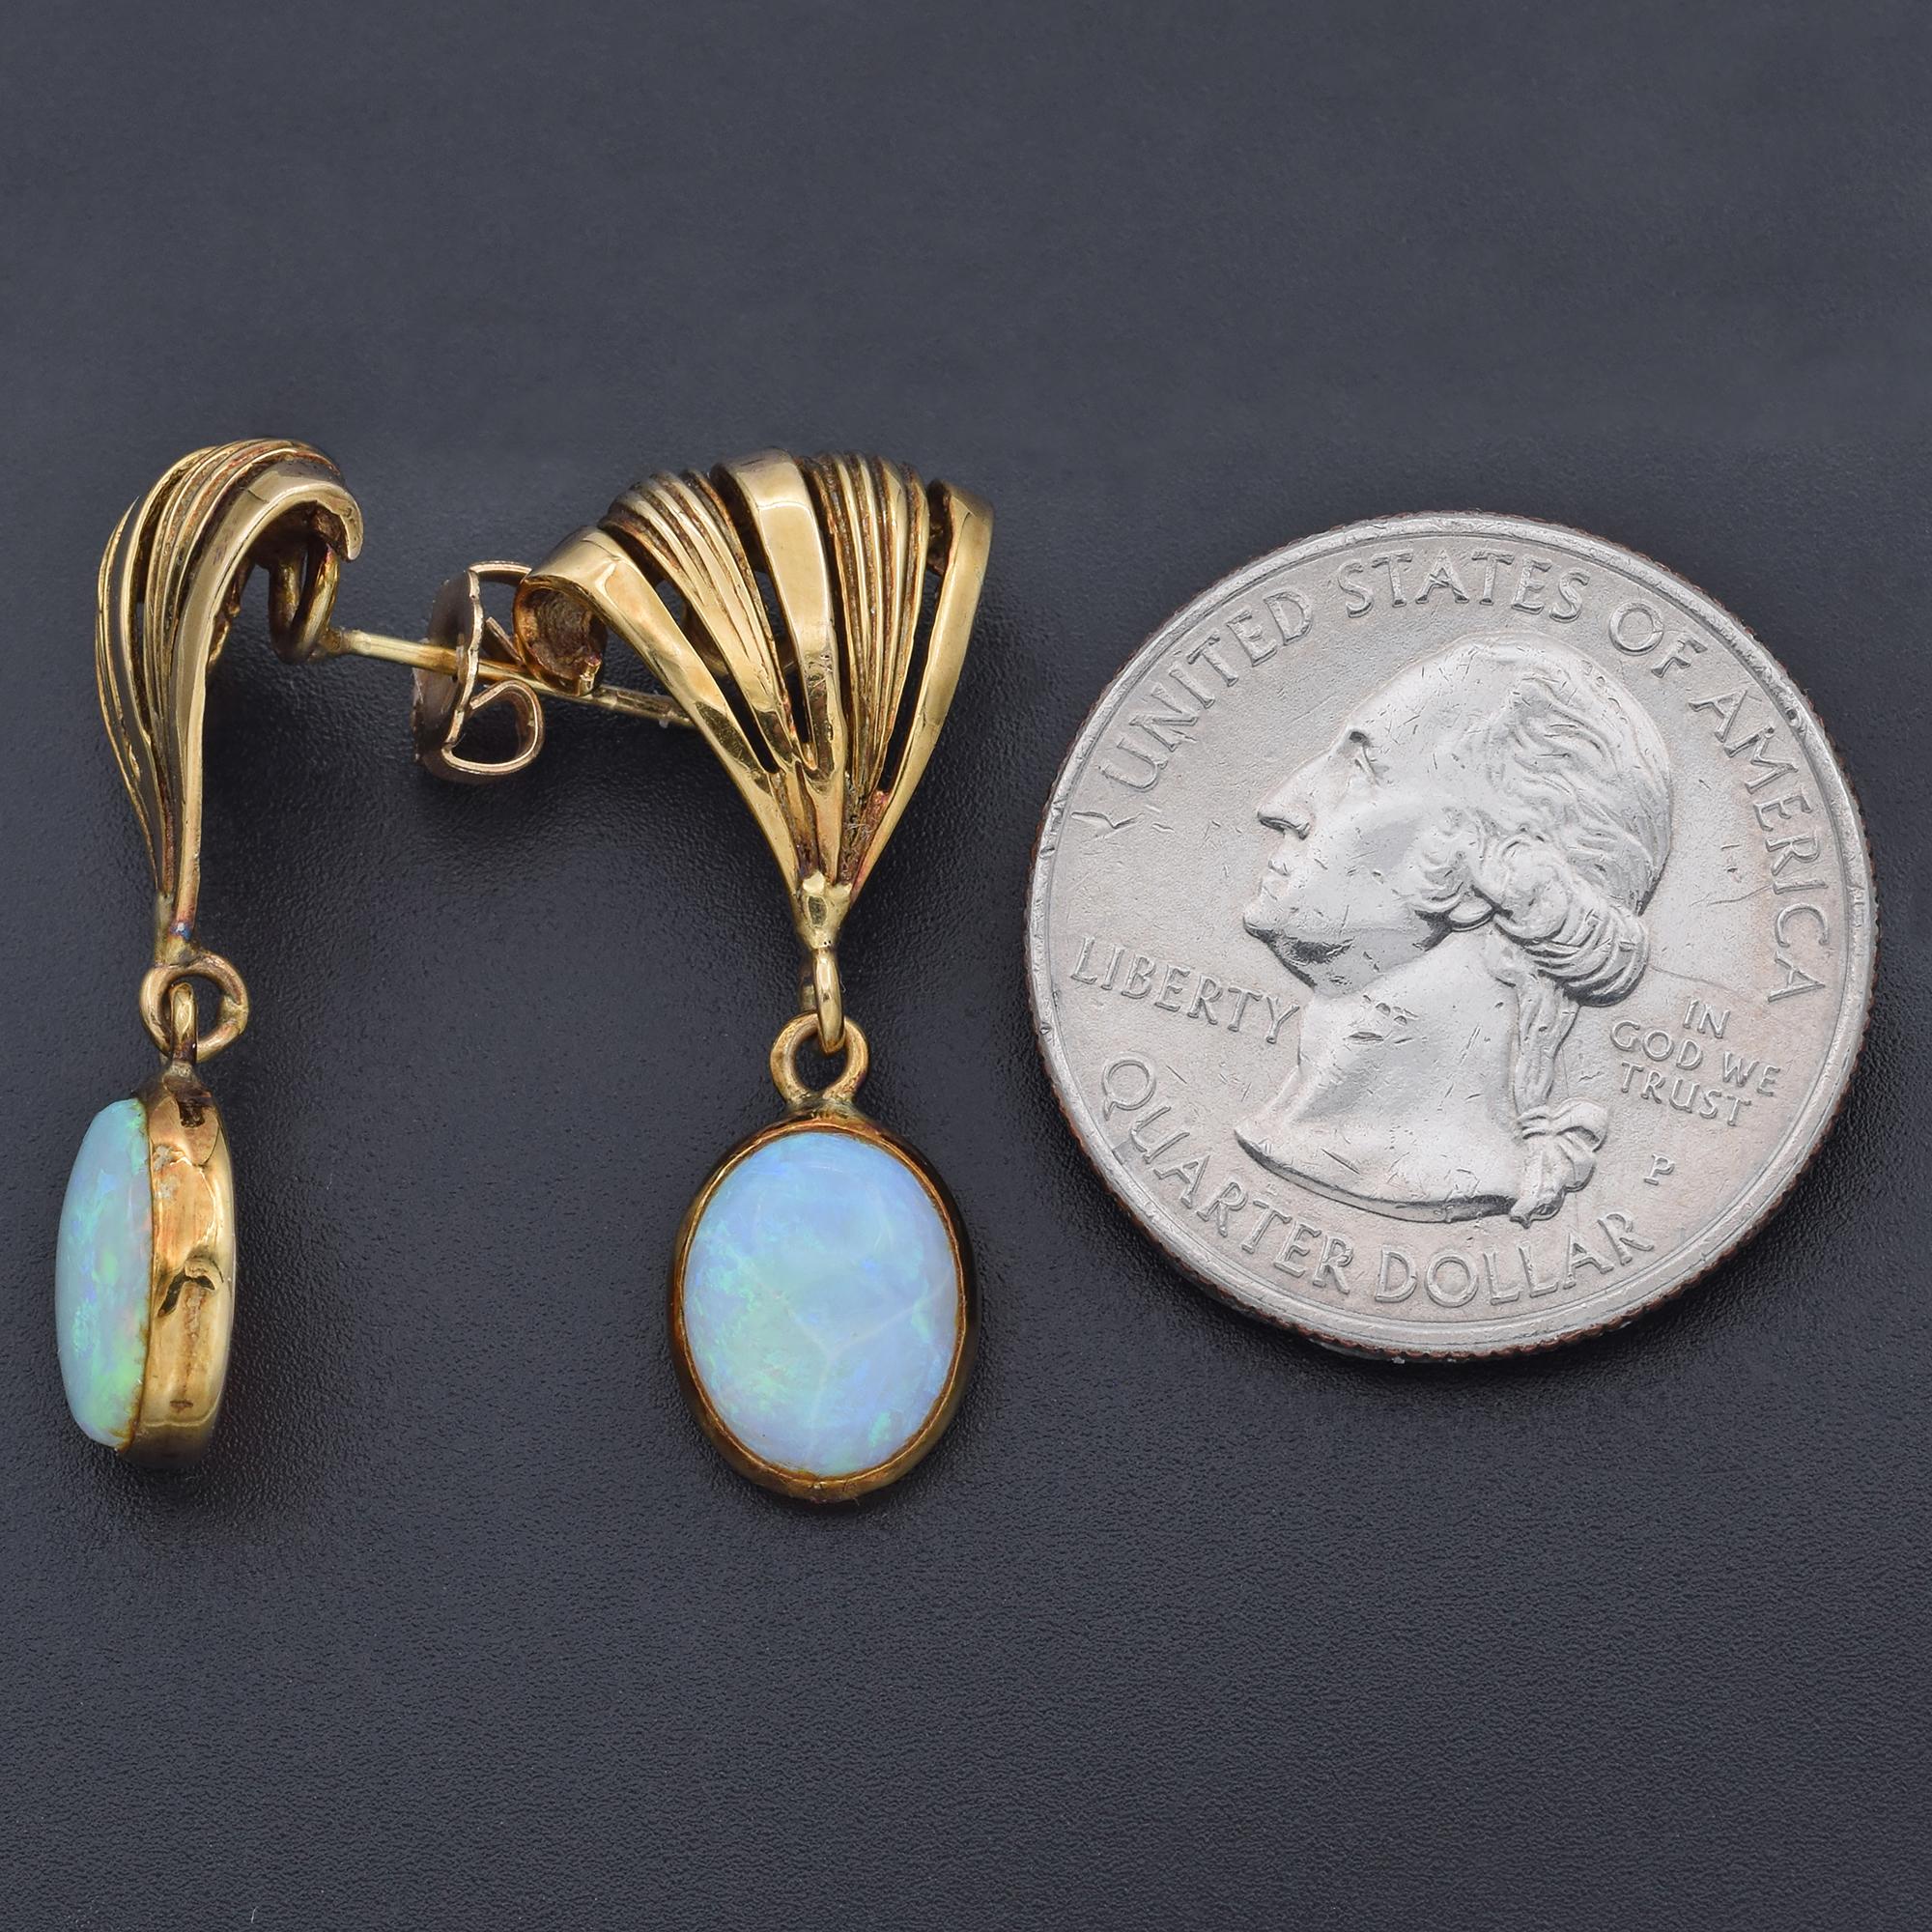 Weight: 4.9 Grams
Stone: Opal (10 x 8 mm)
Measurements: 29.5 x 14.0 mm
Hallmark: 14K

ITEM #: BR-1063-100423-16